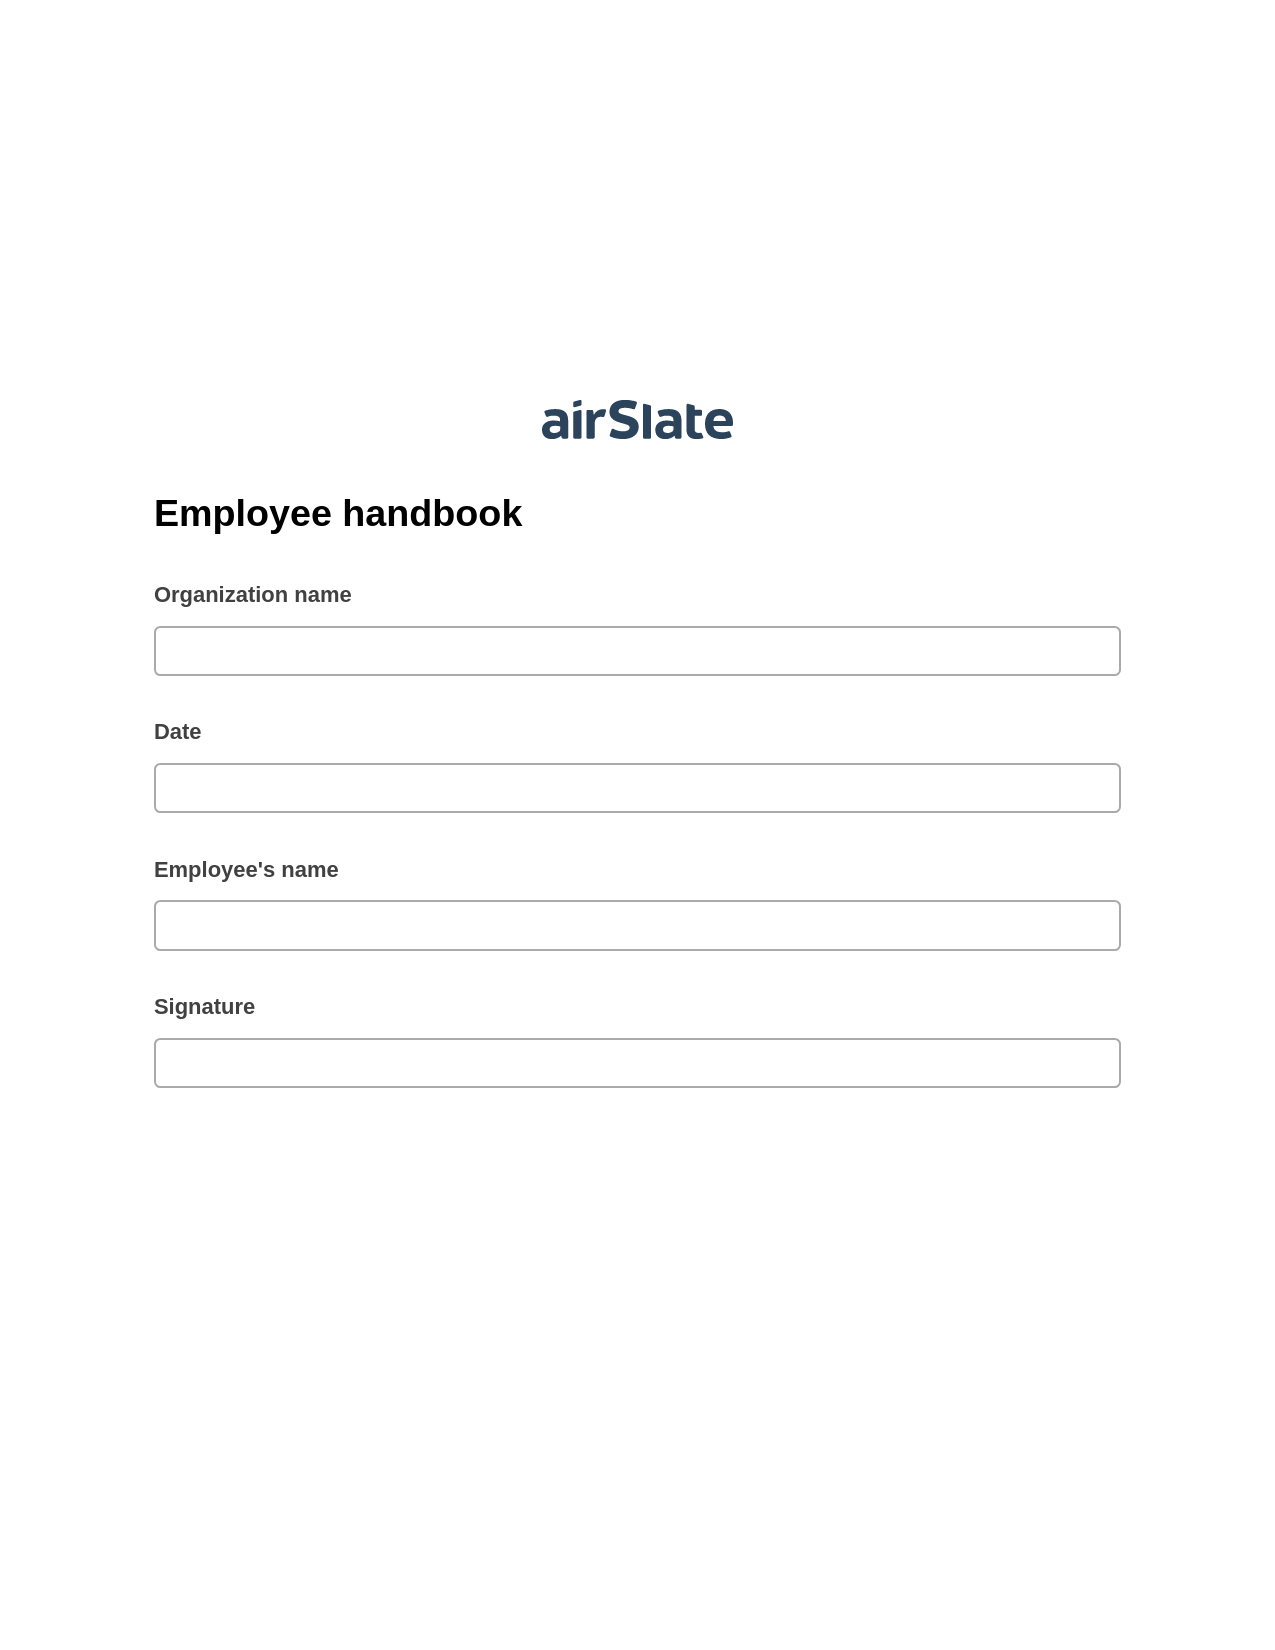 Multirole Employee handbook Pre-fill from Excel Spreadsheet Bot, Send Mailchimp Campaign Bot, OneDrive Bot